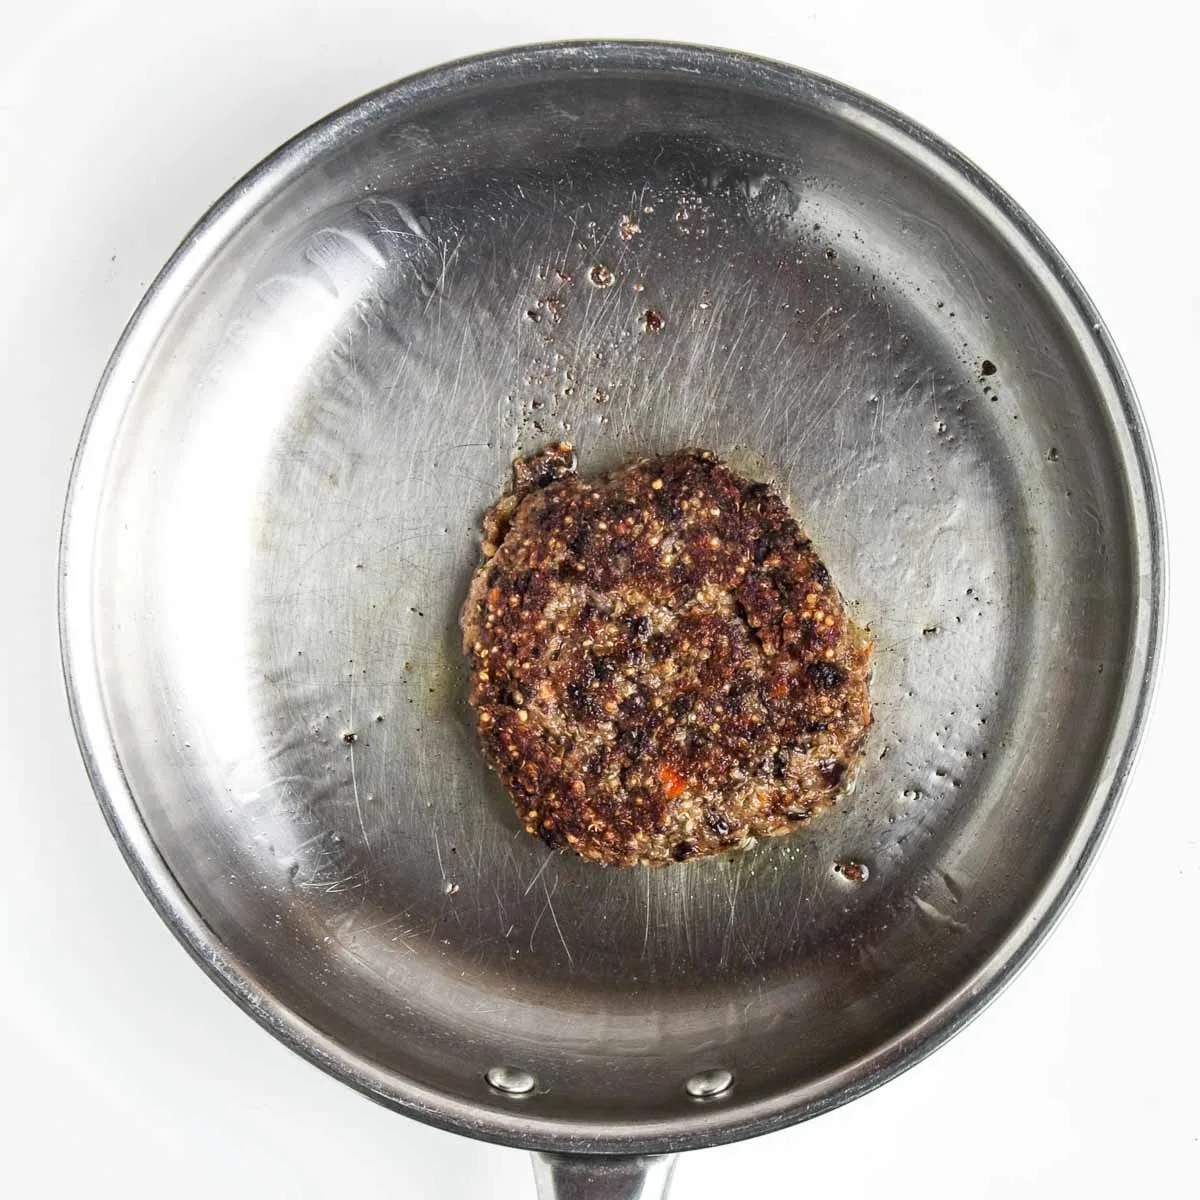 Black bean quinoa burger cooking in a pan